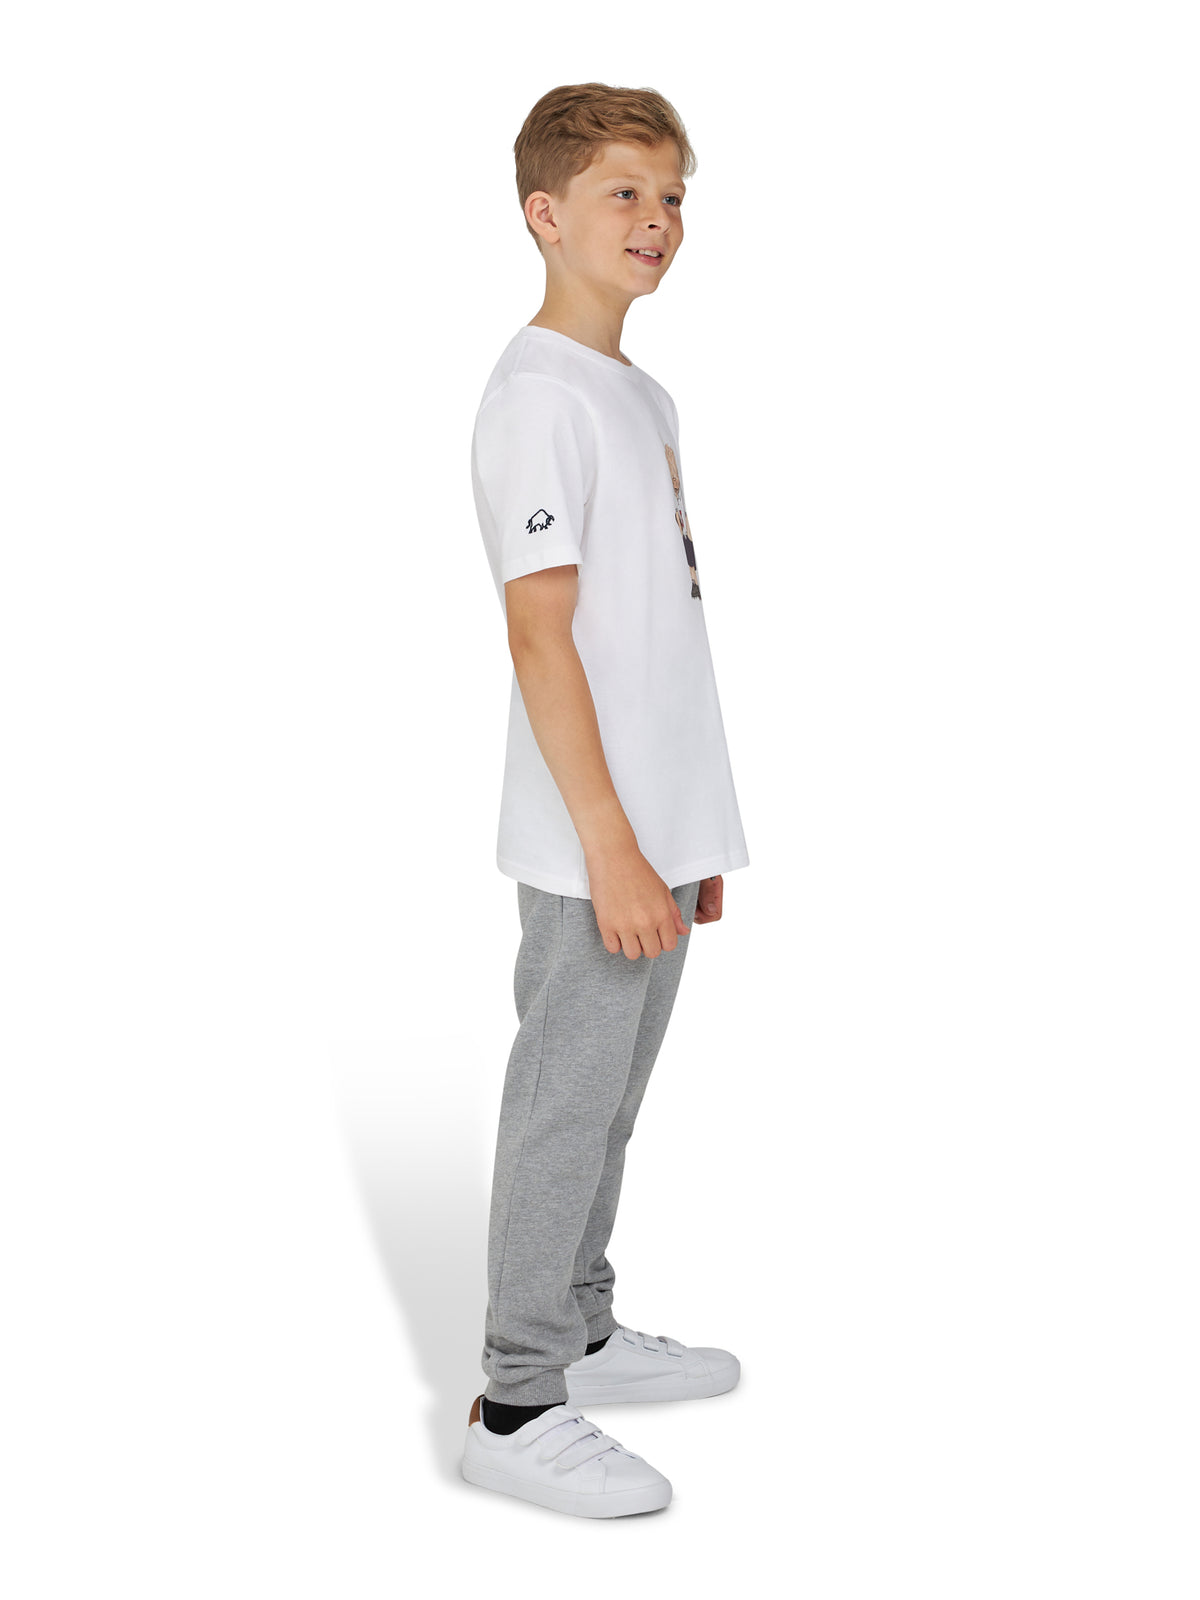 Bully Boy T-Shirt - White